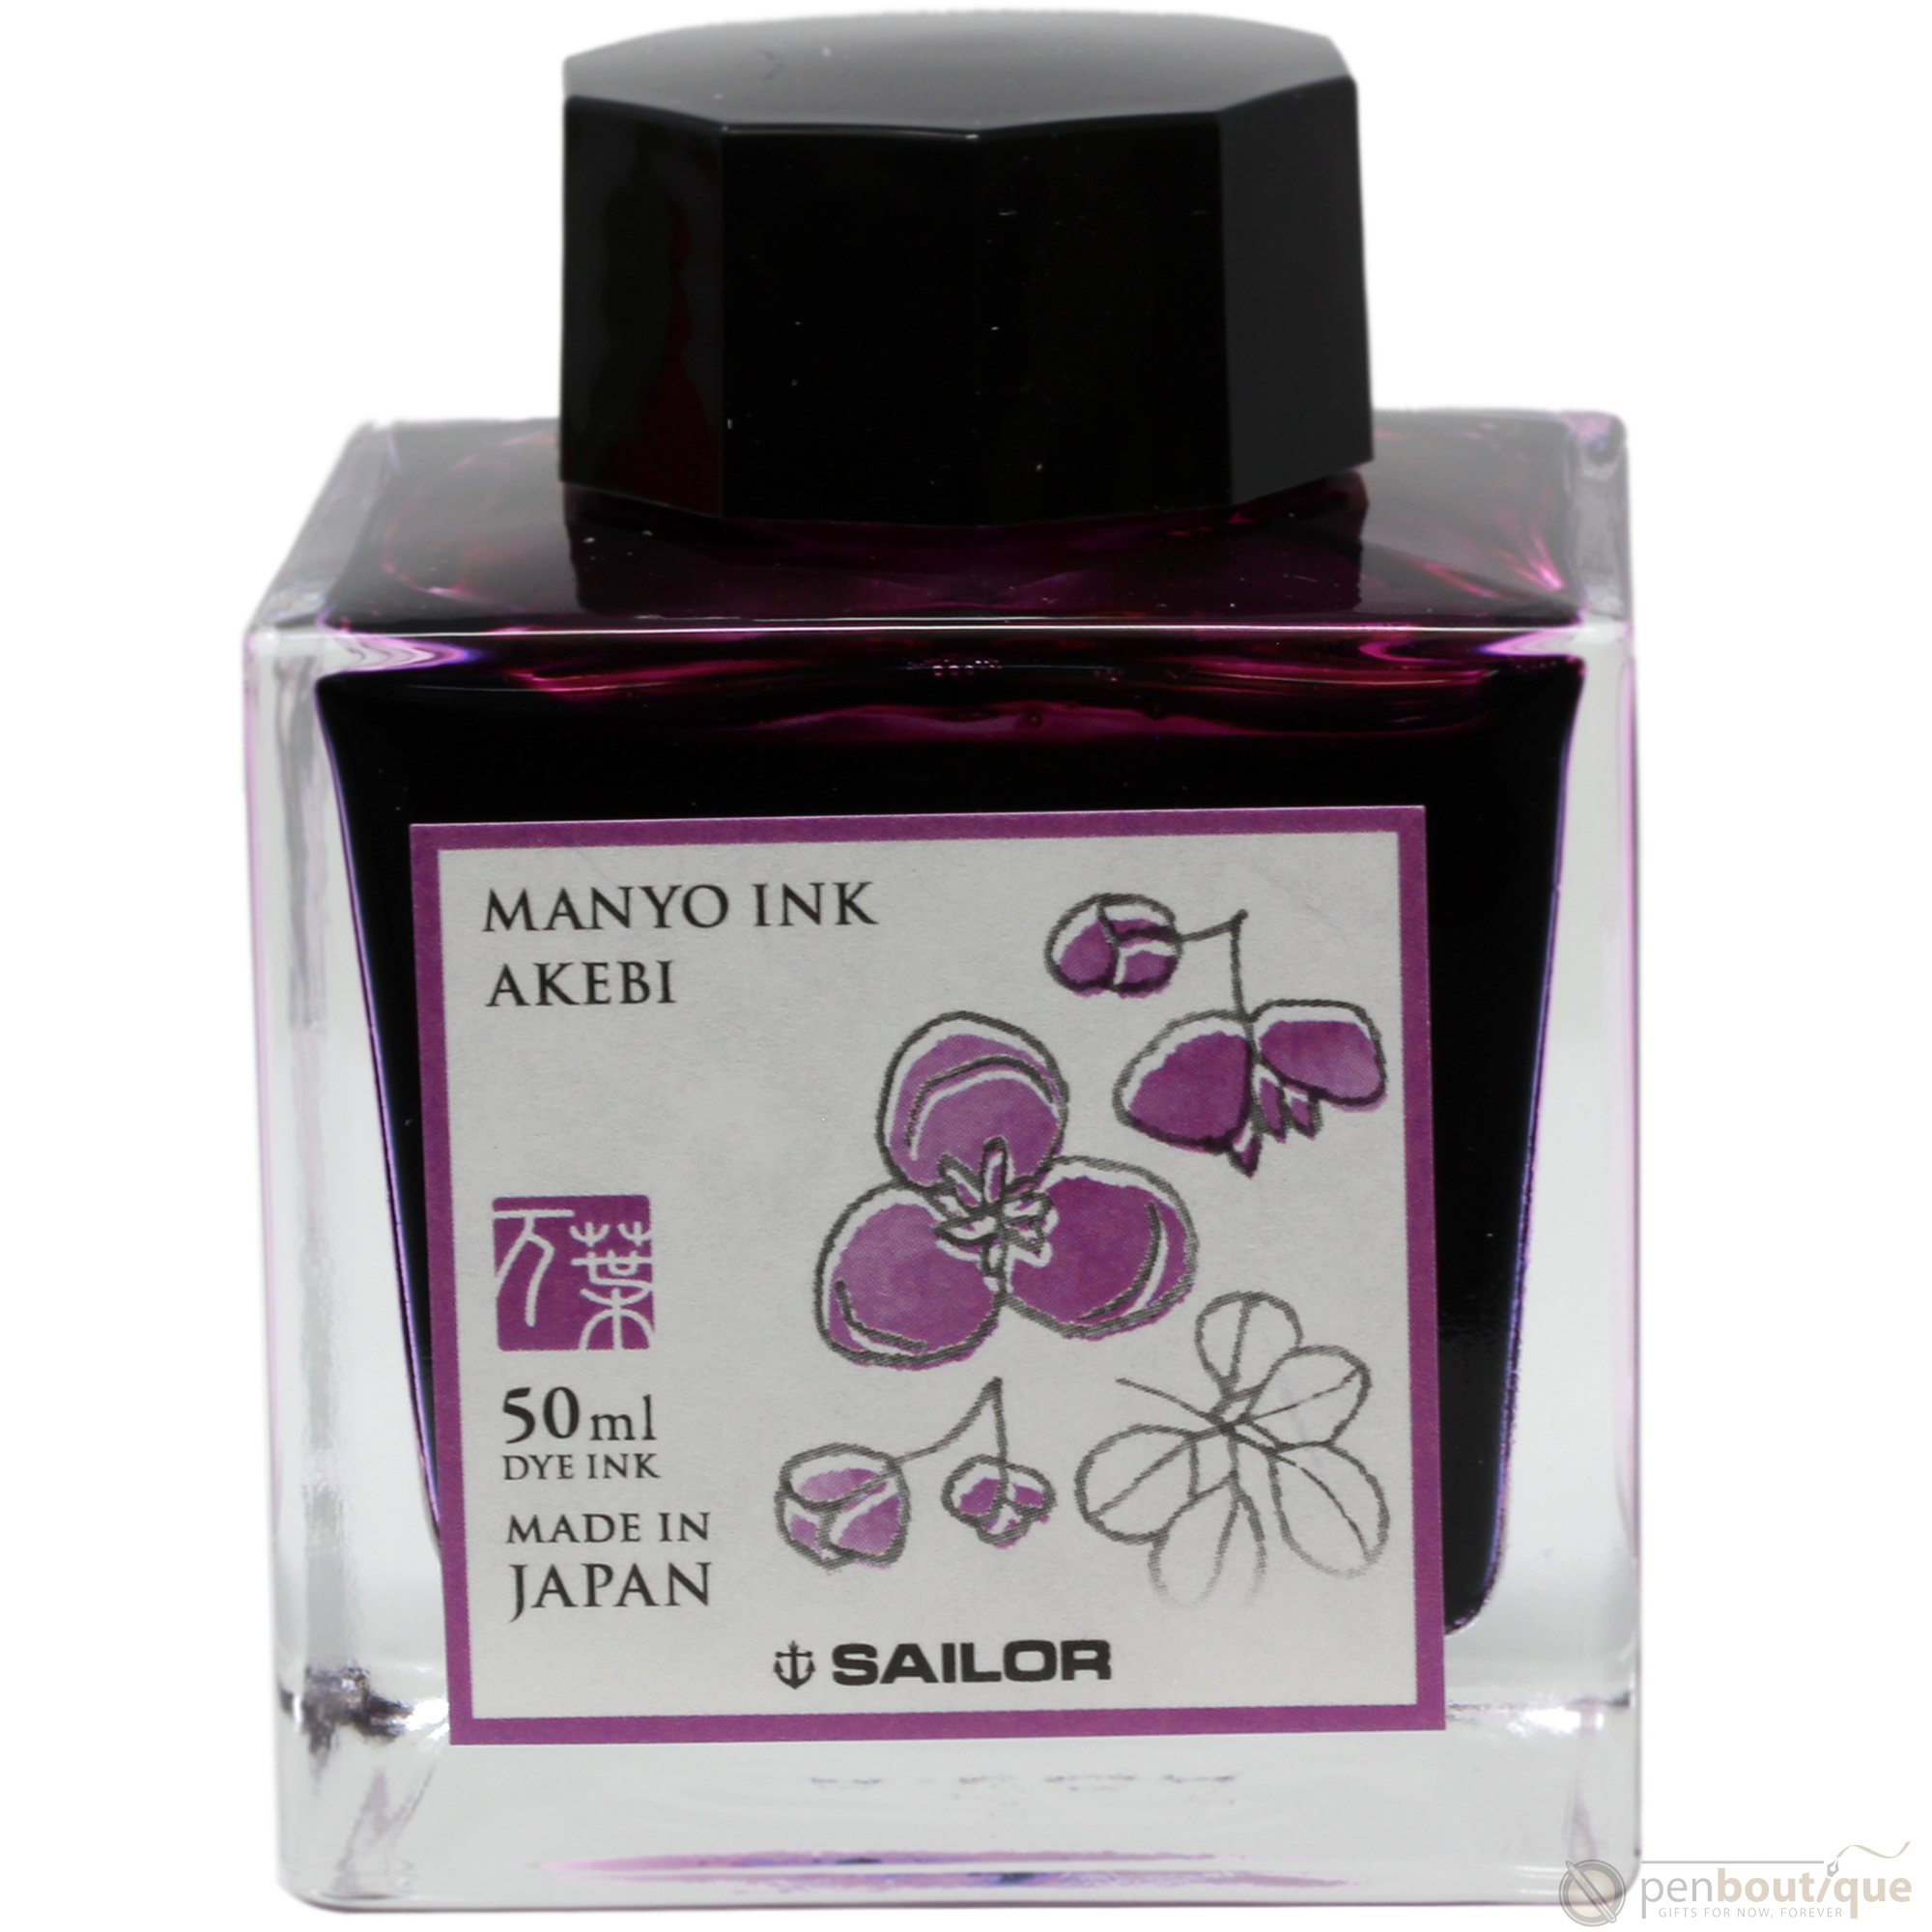 Sailor Manyo Ink Bottle - Akebi - 50ml-Pen Boutique Ltd